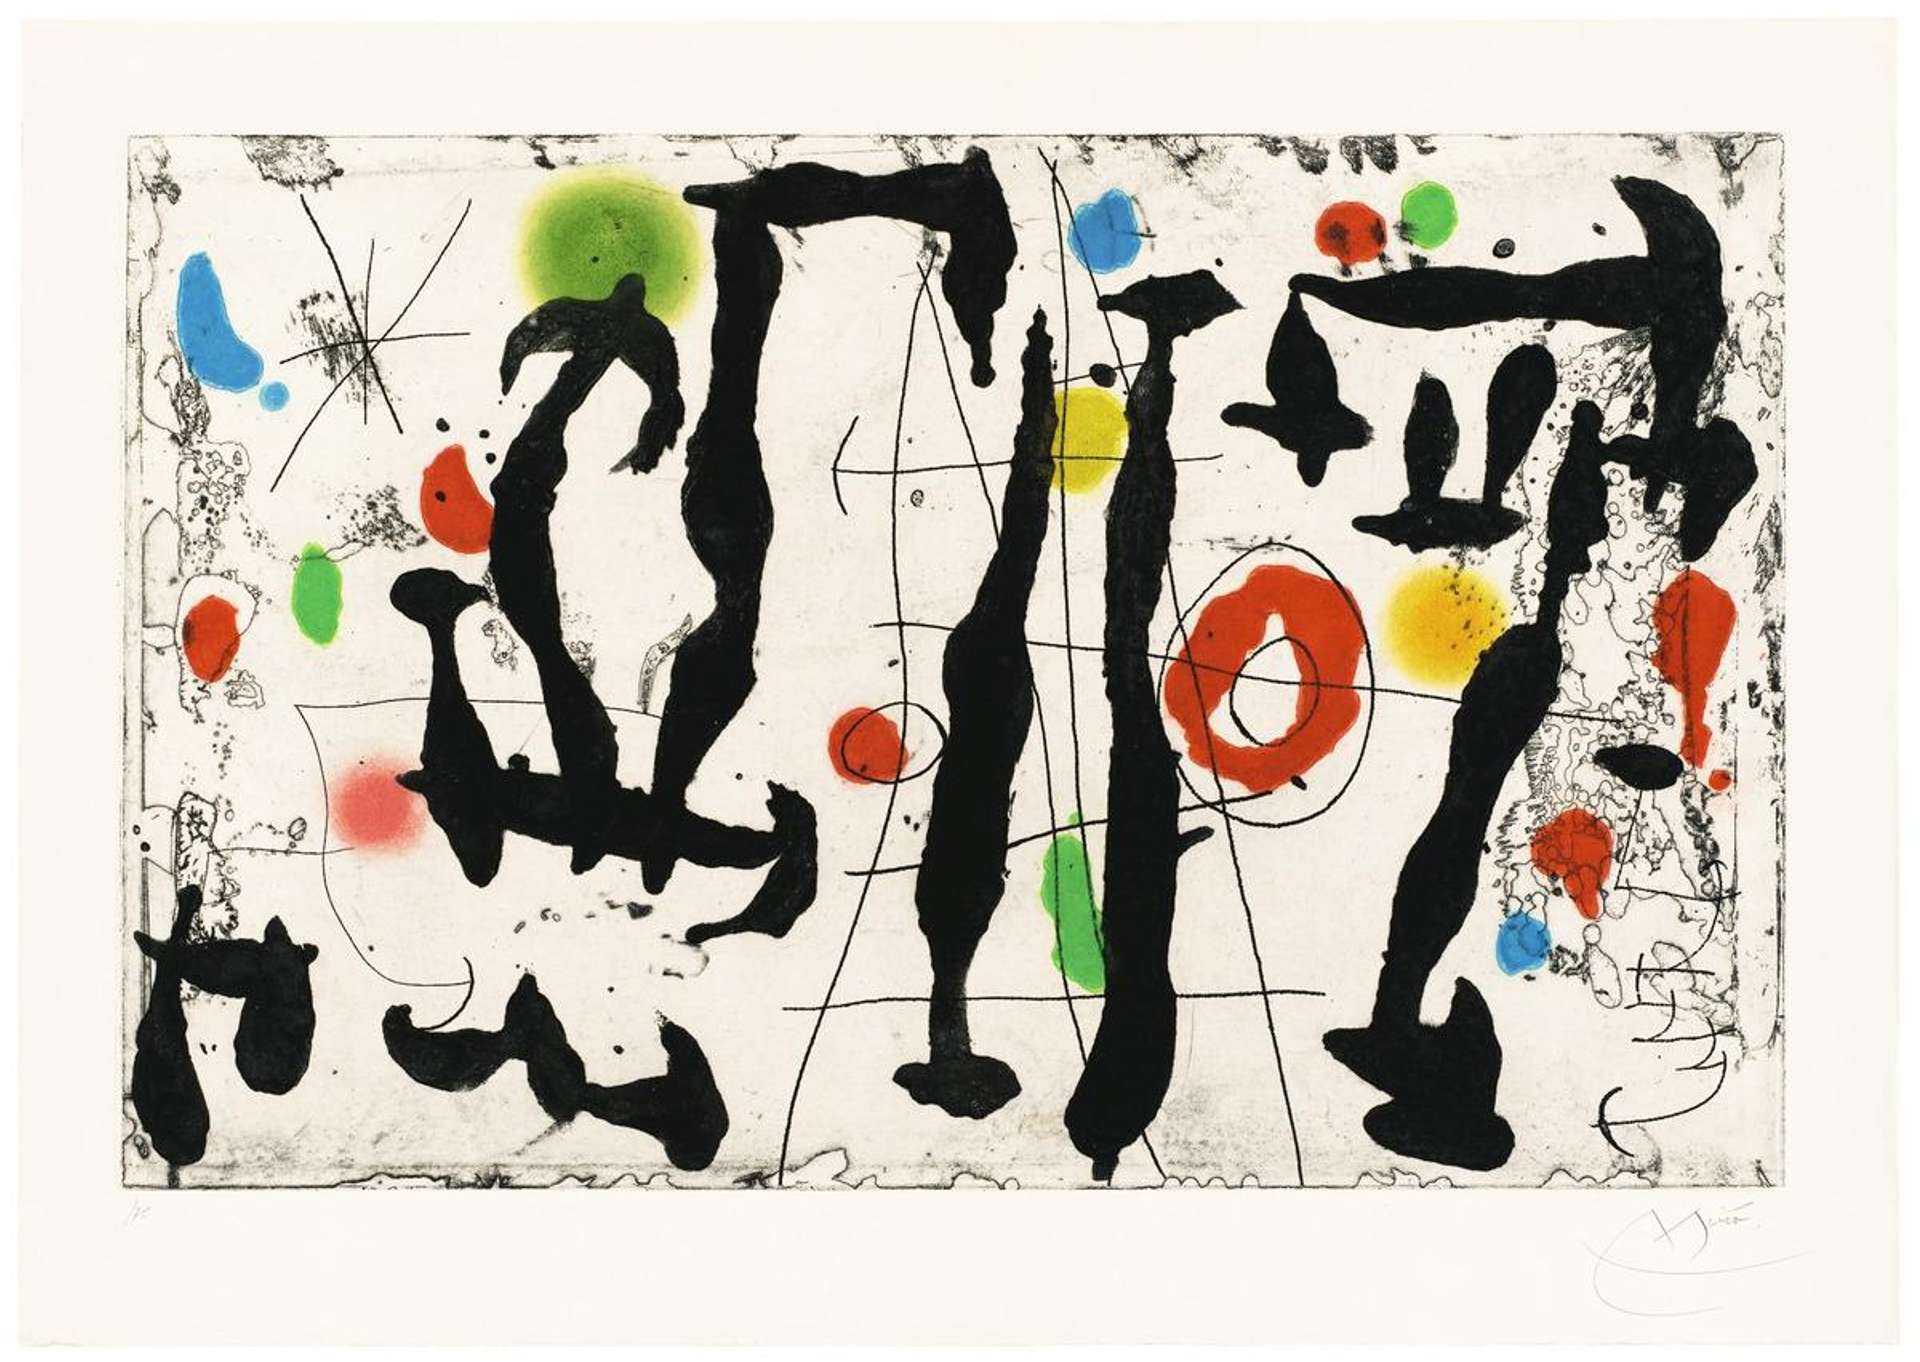 Tracé Sur La Paroi IV - Signed Print by Joan Miró 1967 - MyArtBroker